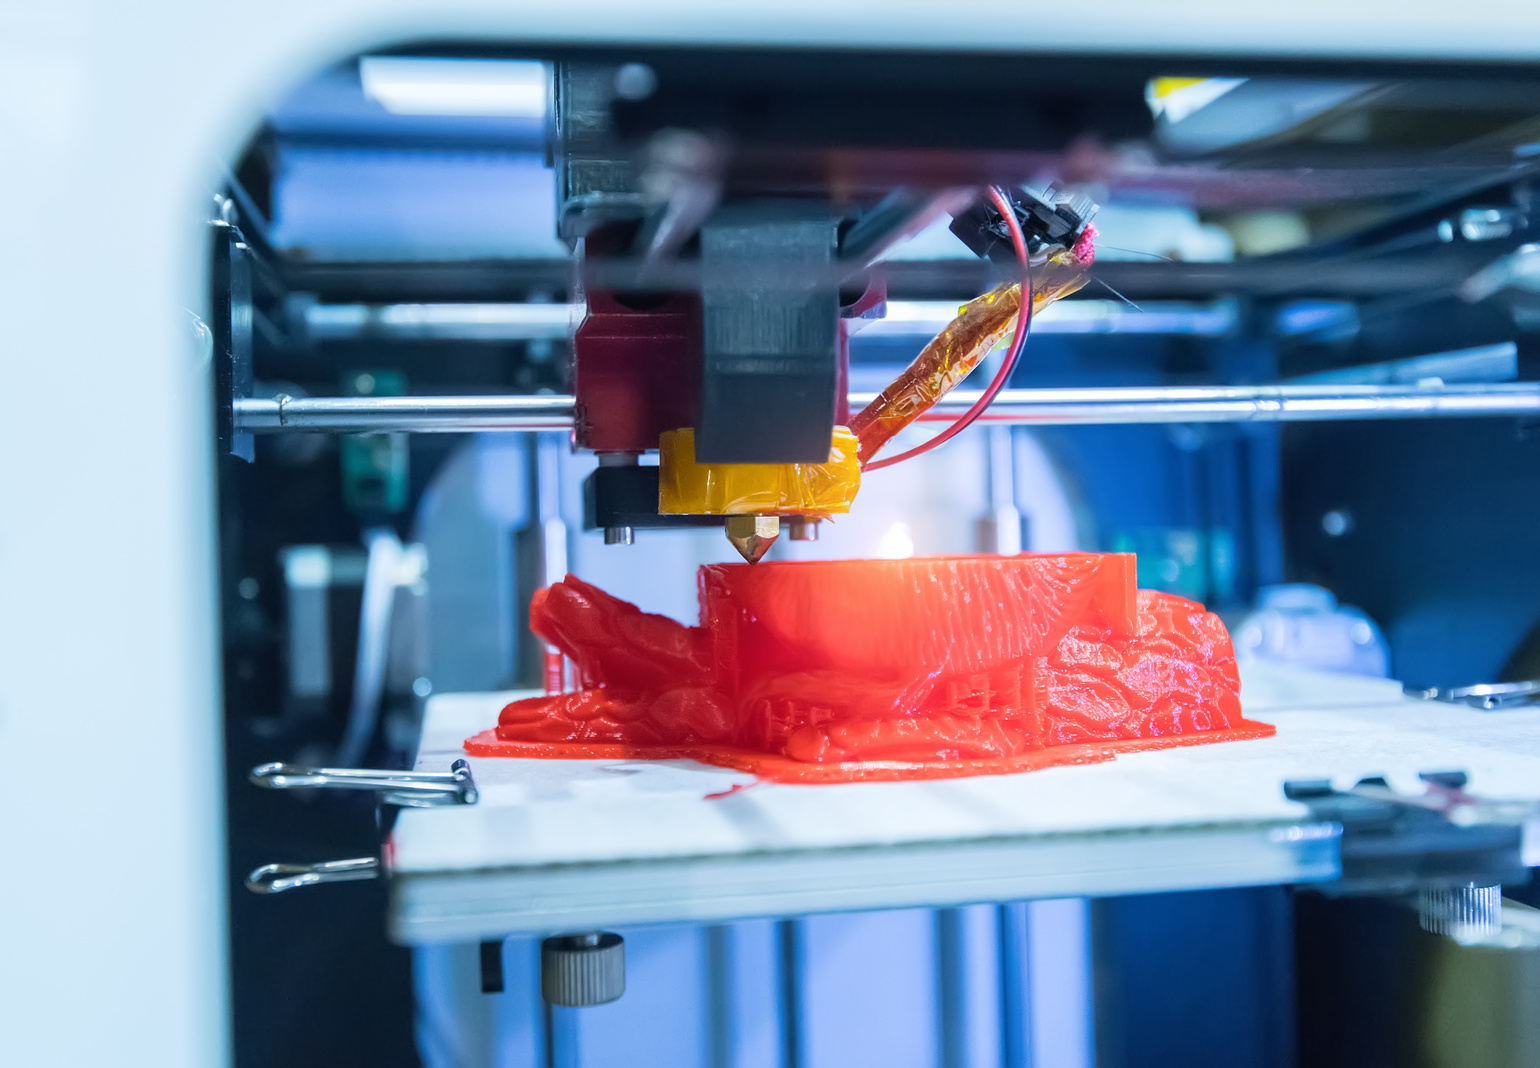 3D Printing Machine